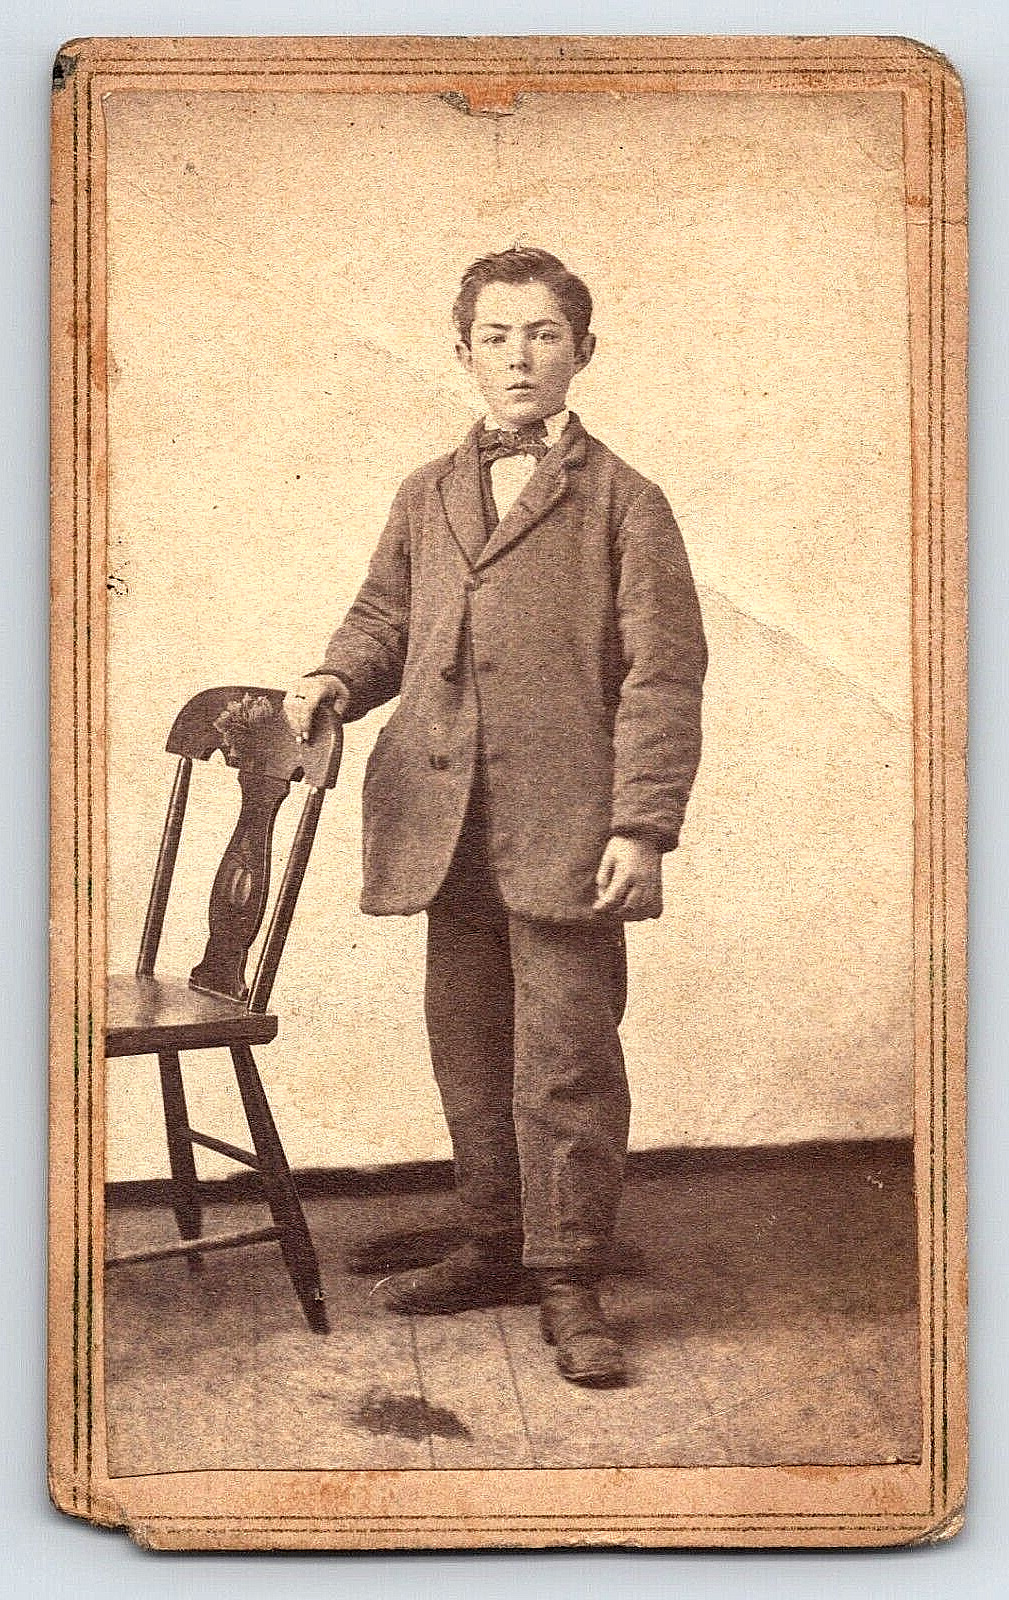 Original Old Vintage Photo Antique CDV Young Gentleman Boy Suit Tie Chair